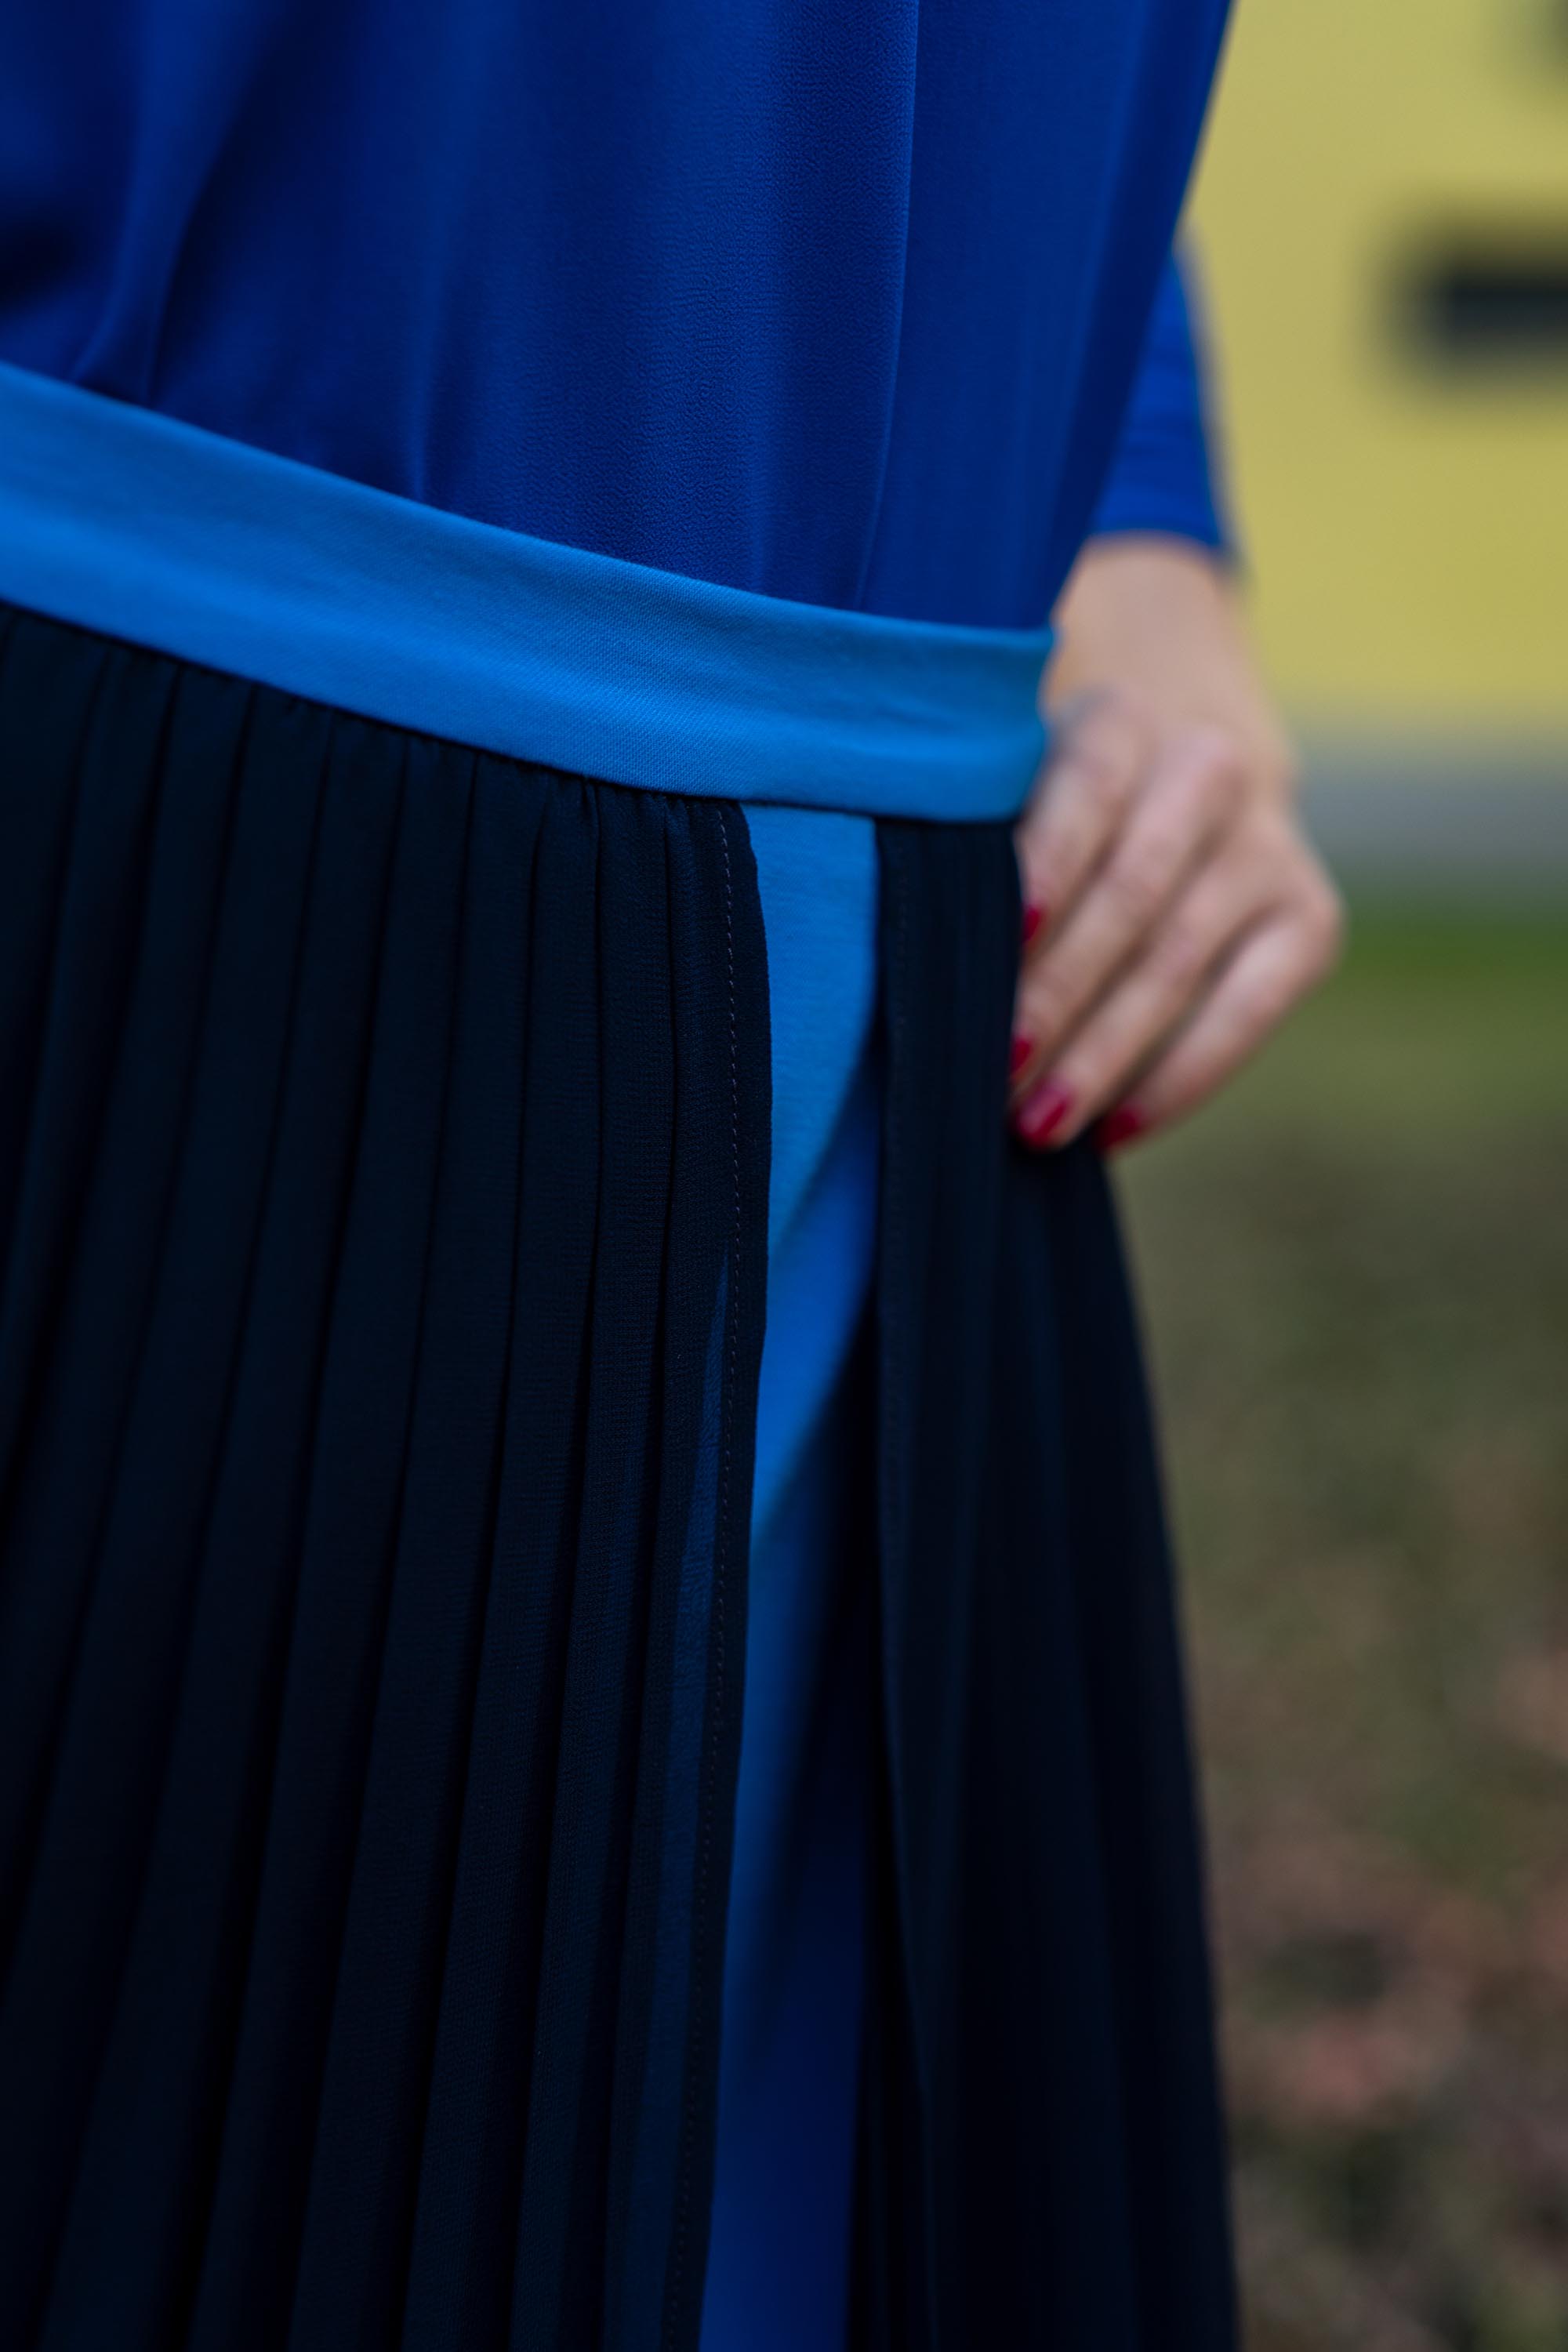 Blue pleated frill skirt